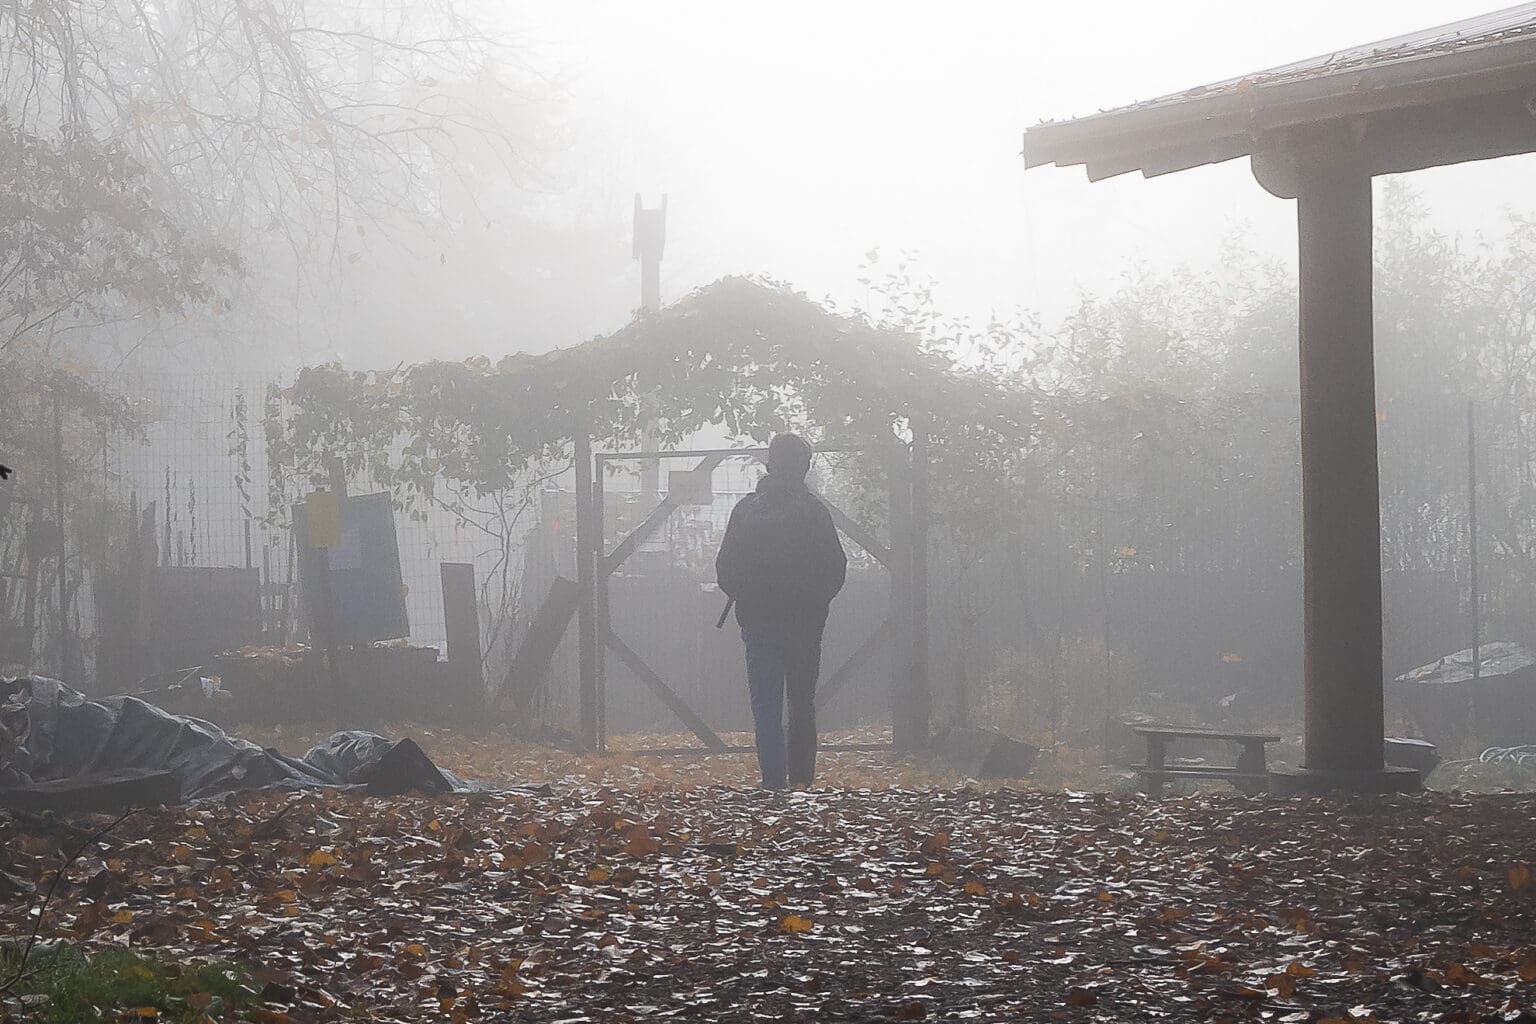 A student walks toward the foggy gated entrance of the Outback farm.